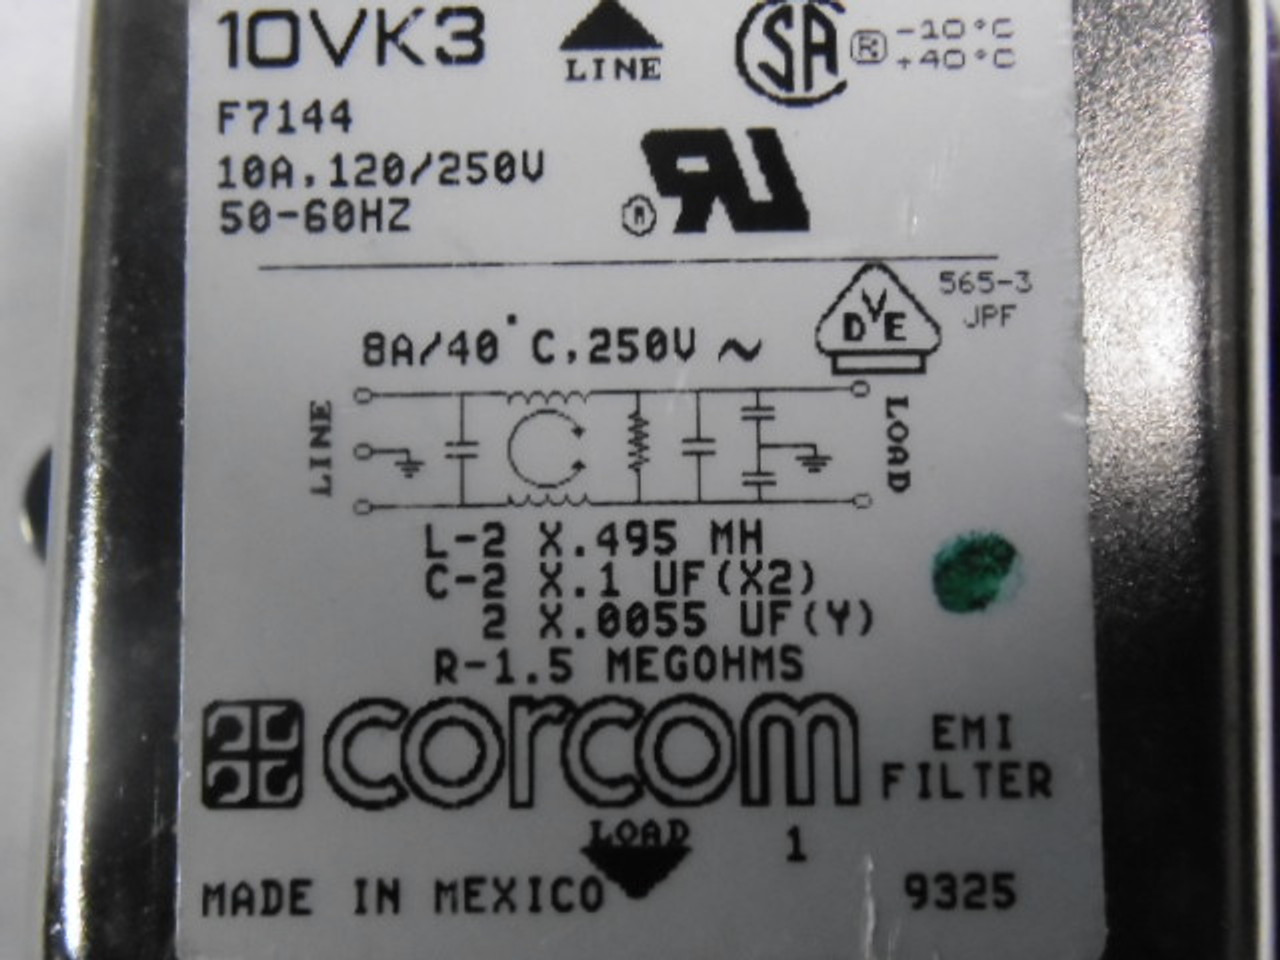 Corcom 10VK3 Power Line Filter 10A 250V AC USED